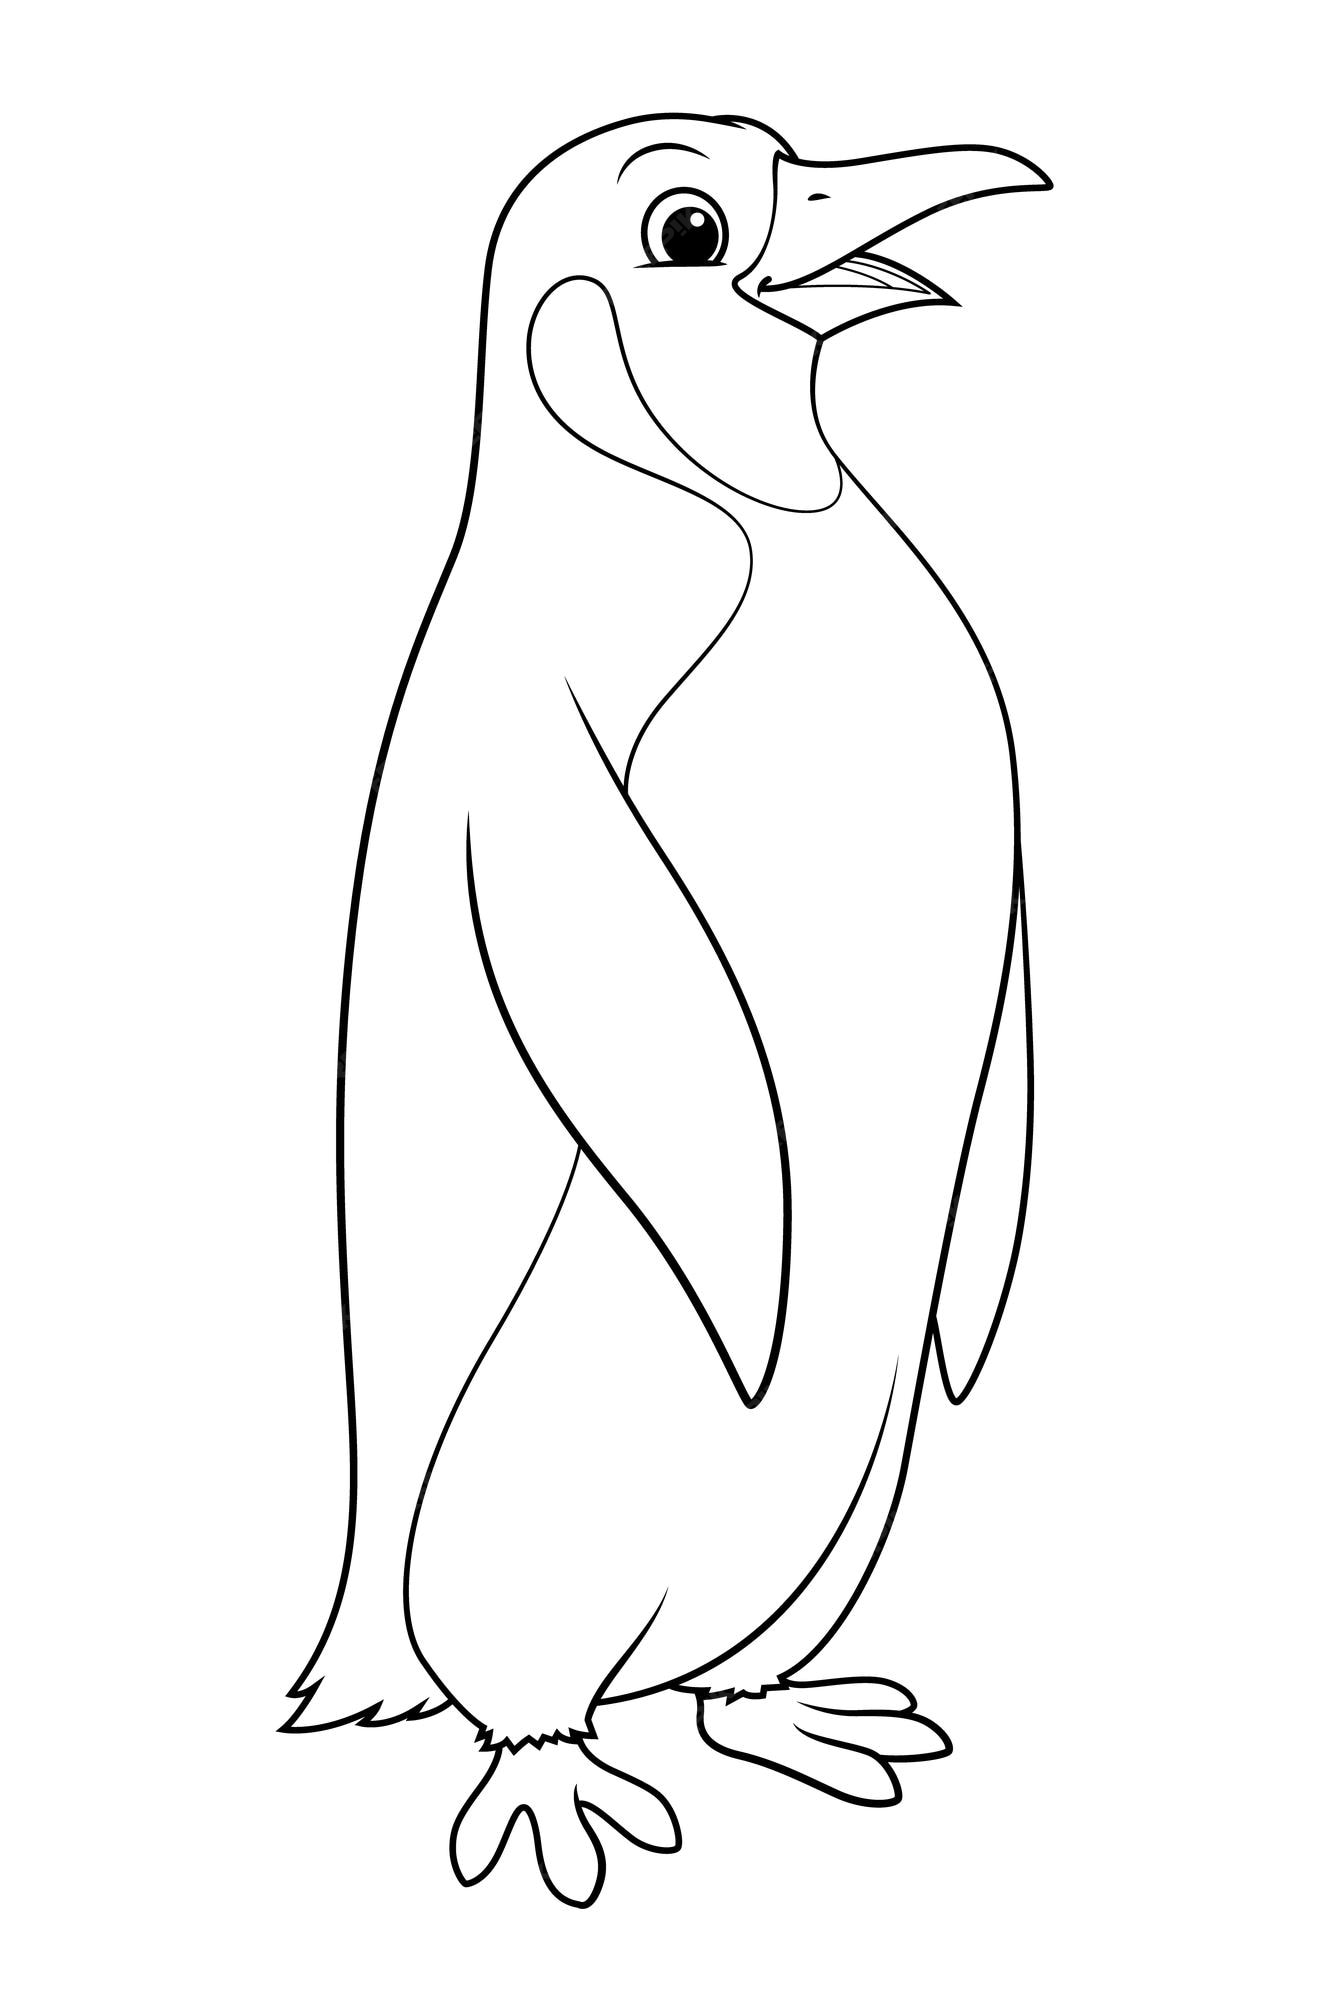 Premium Vector | Penguin cartoon animal illustration bw